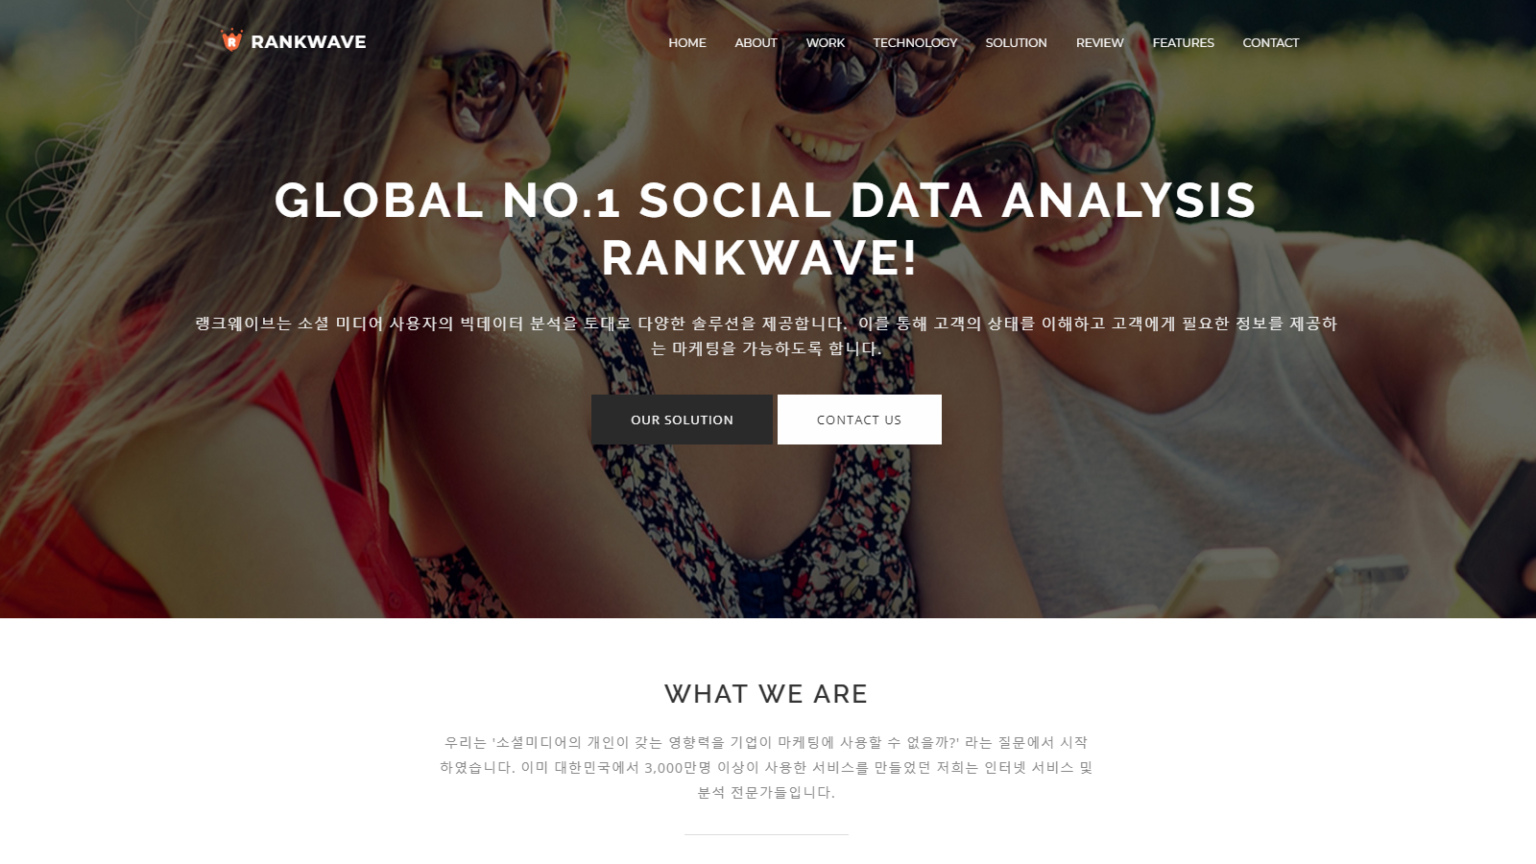 Facebook Sues South Korean Data Analytics Company Rankwave